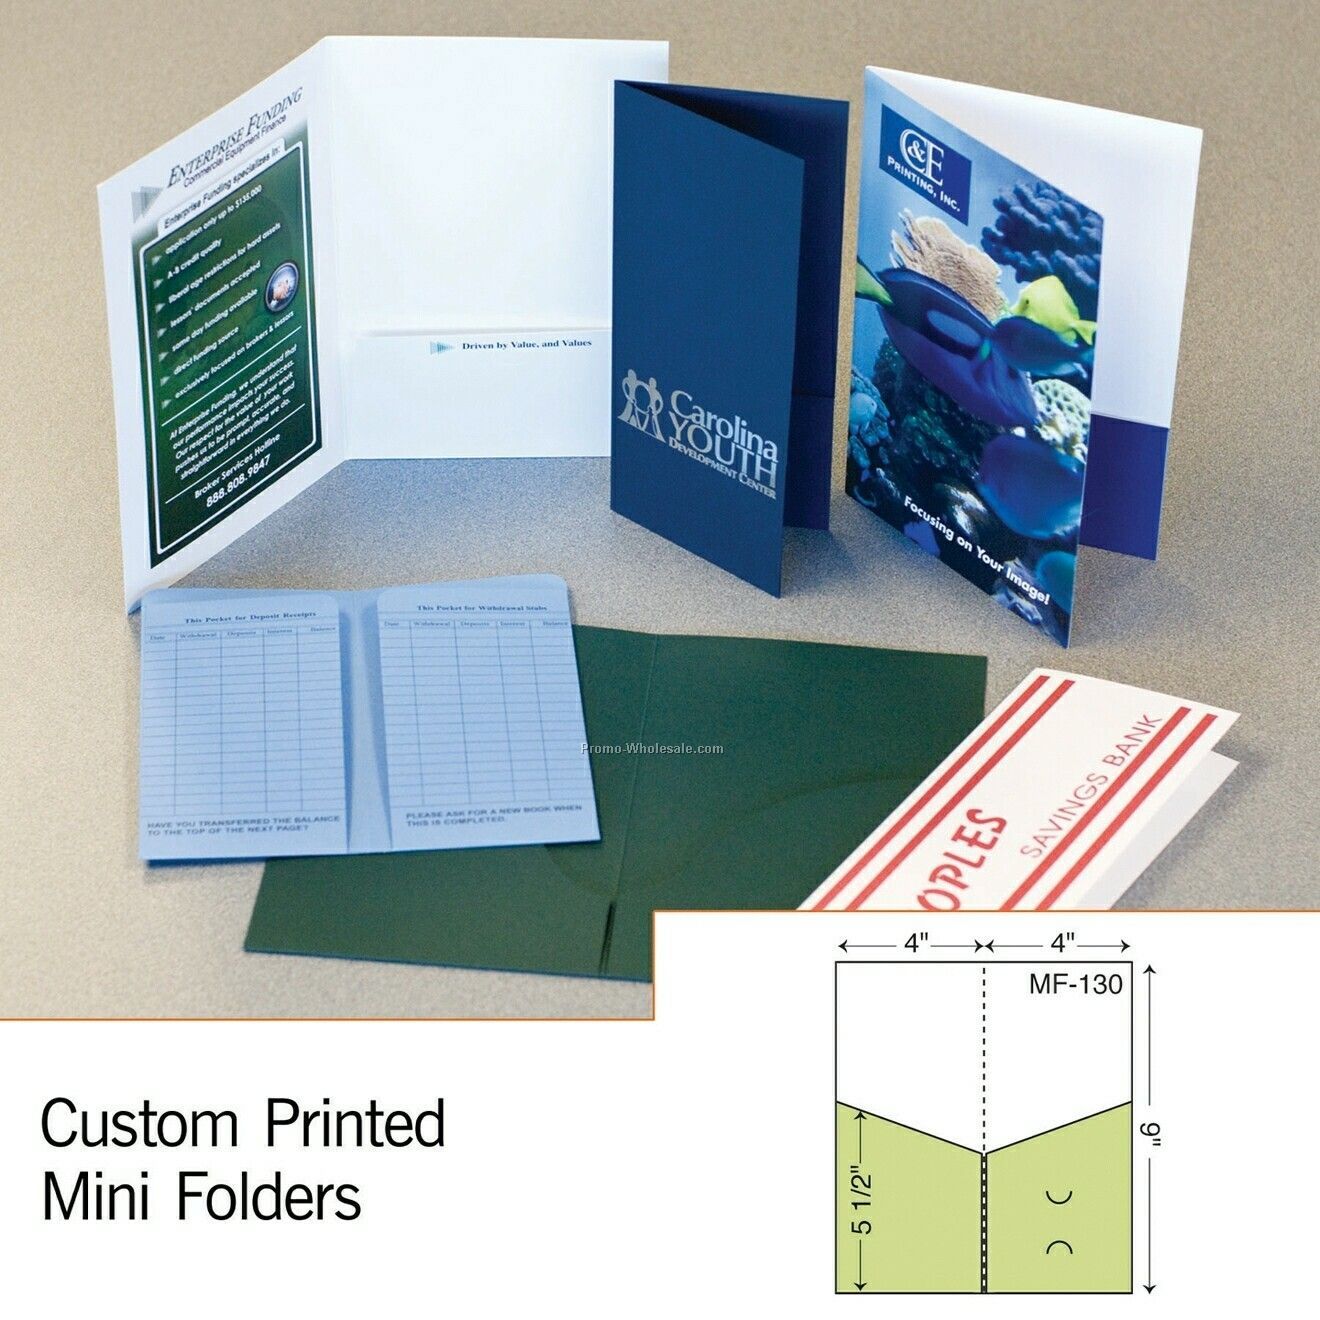 4"x9" Mini Folder W/ Left Pocket (2 Color)